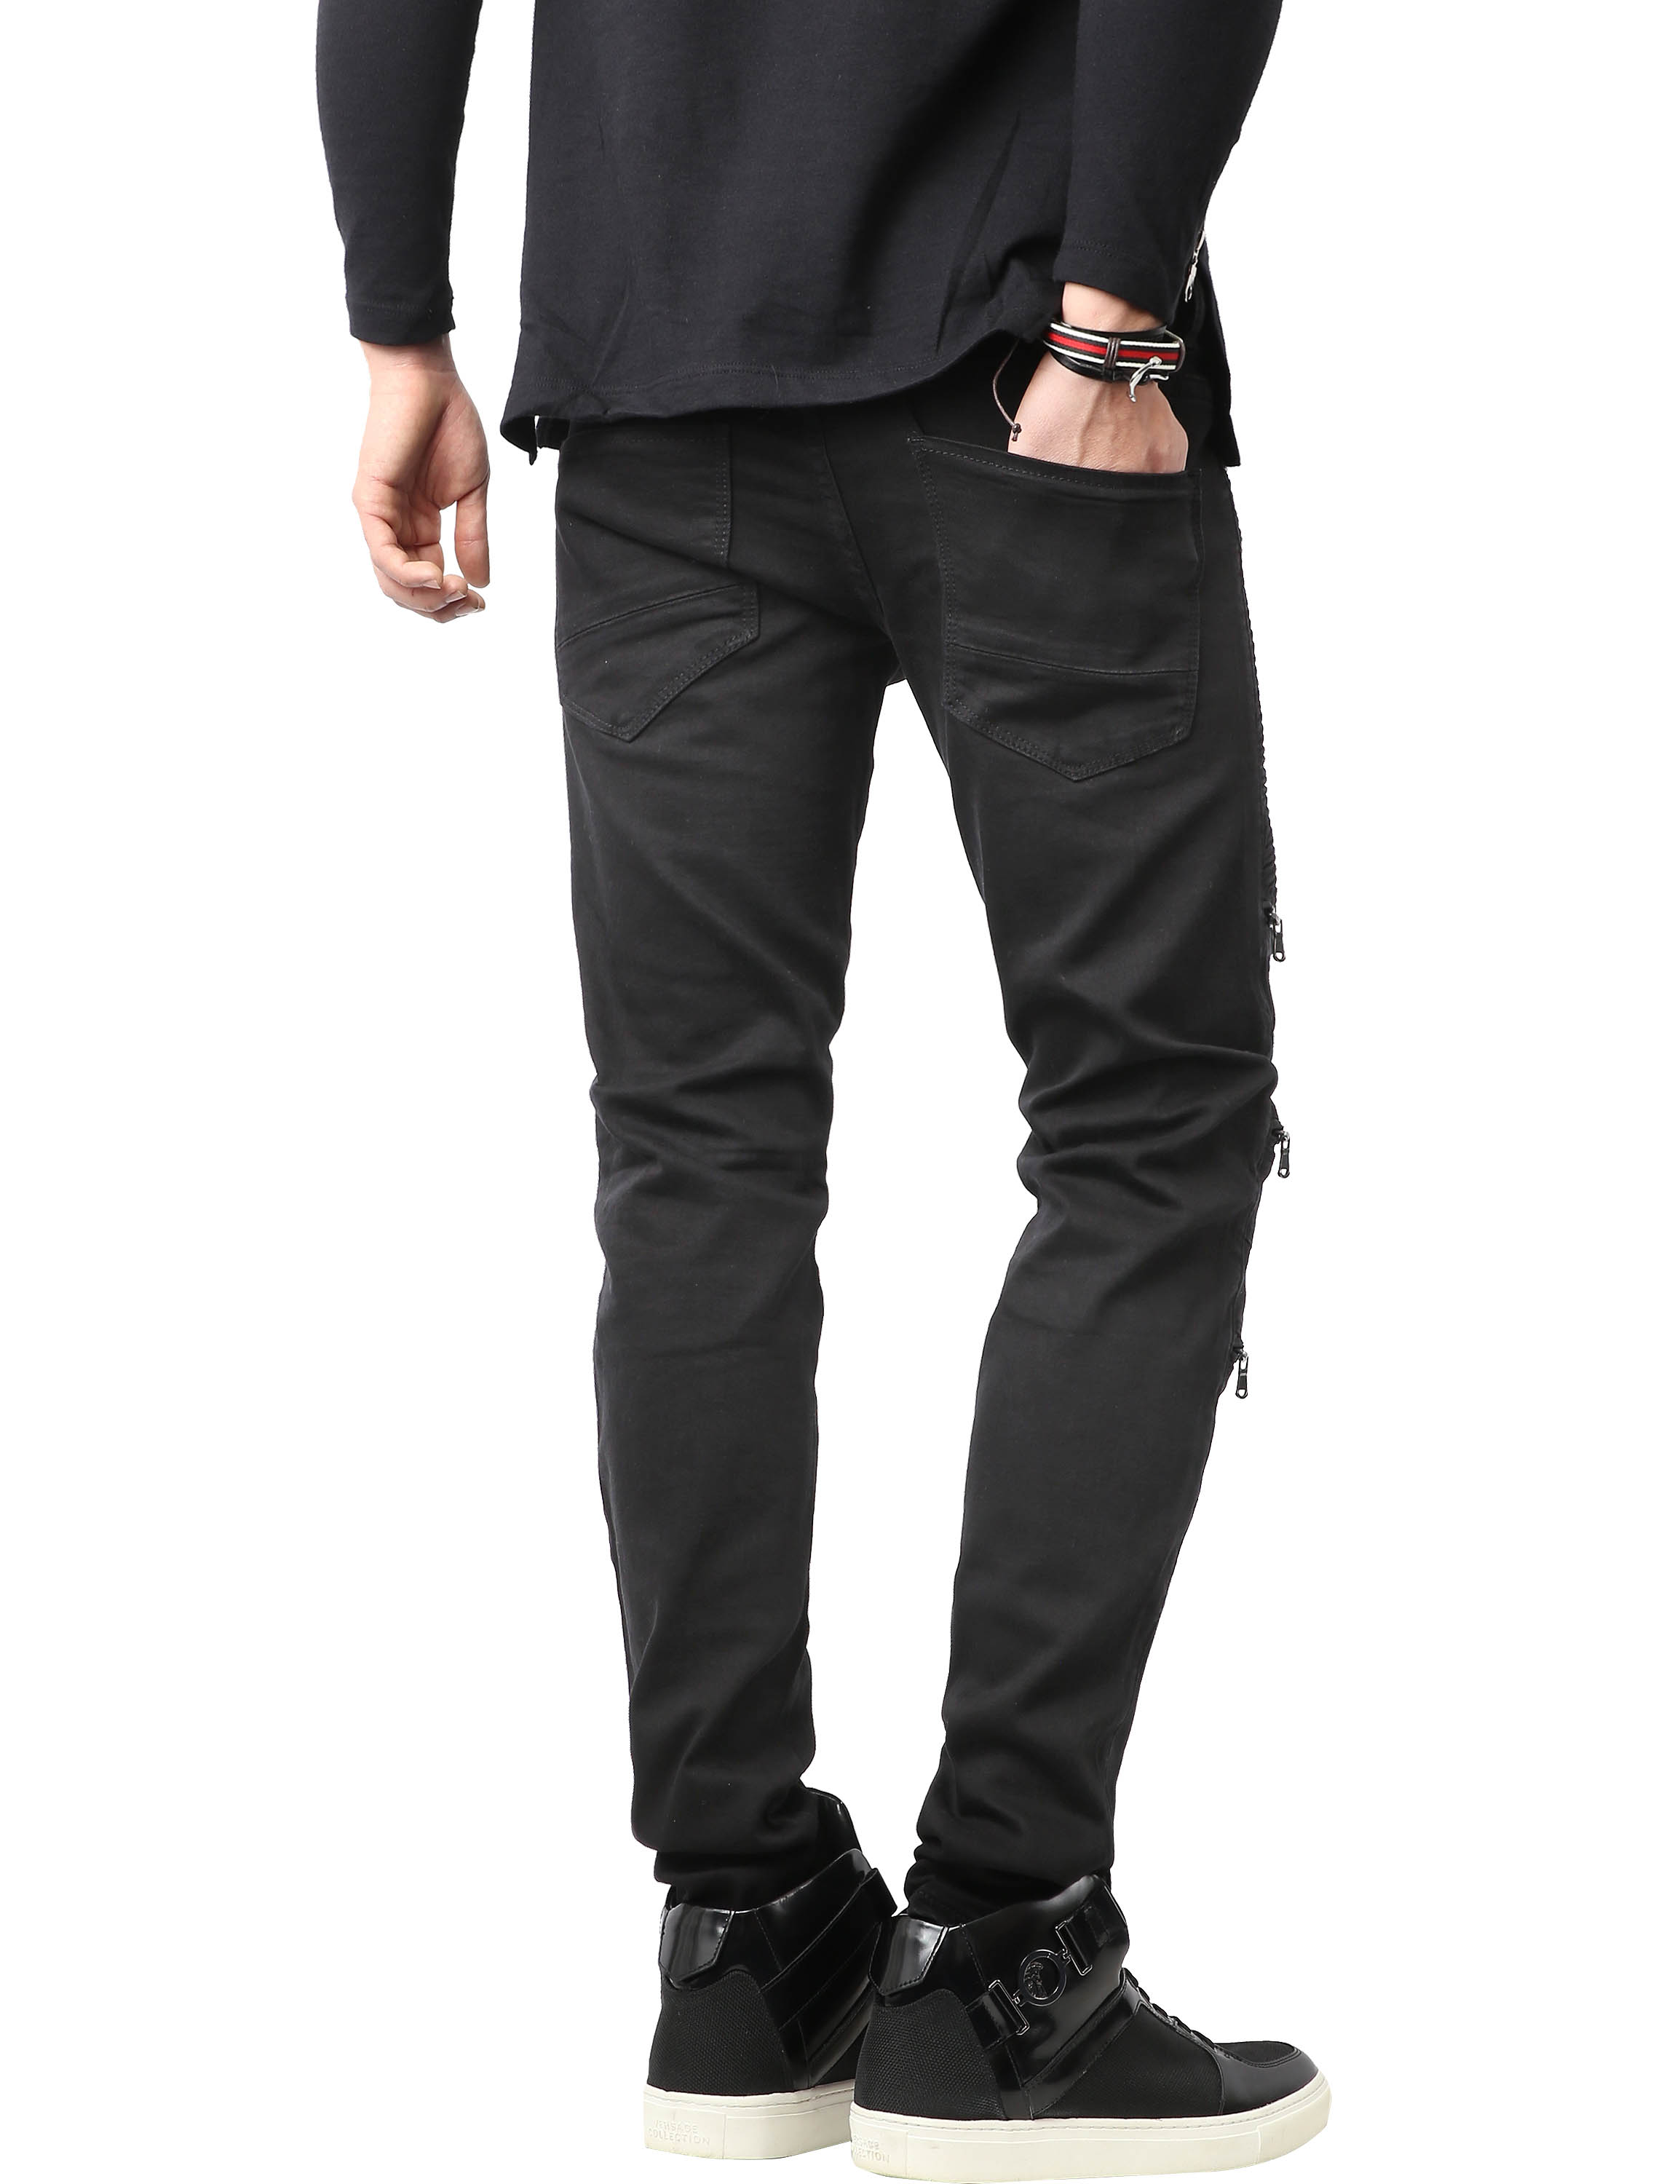 Ma Croix Mens Biker Jeans Slim Fit Distressed Ripped Zipper Stretch Denim Pants - image 4 of 6